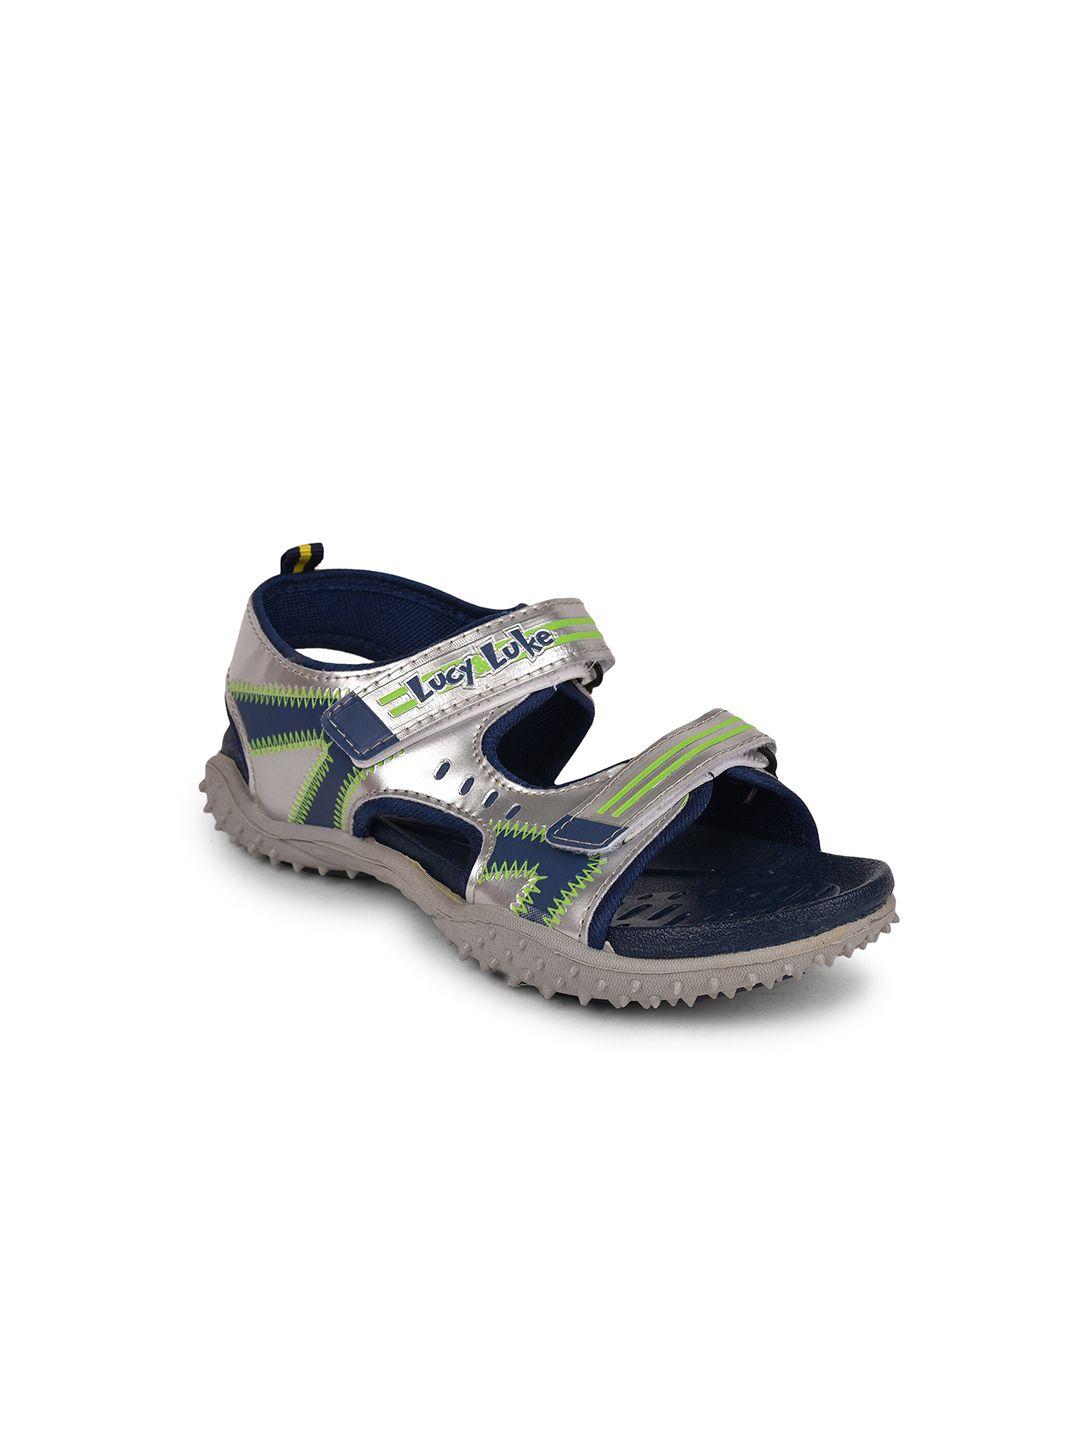 liberty unisex kids blue & silver-toned comfort sandals